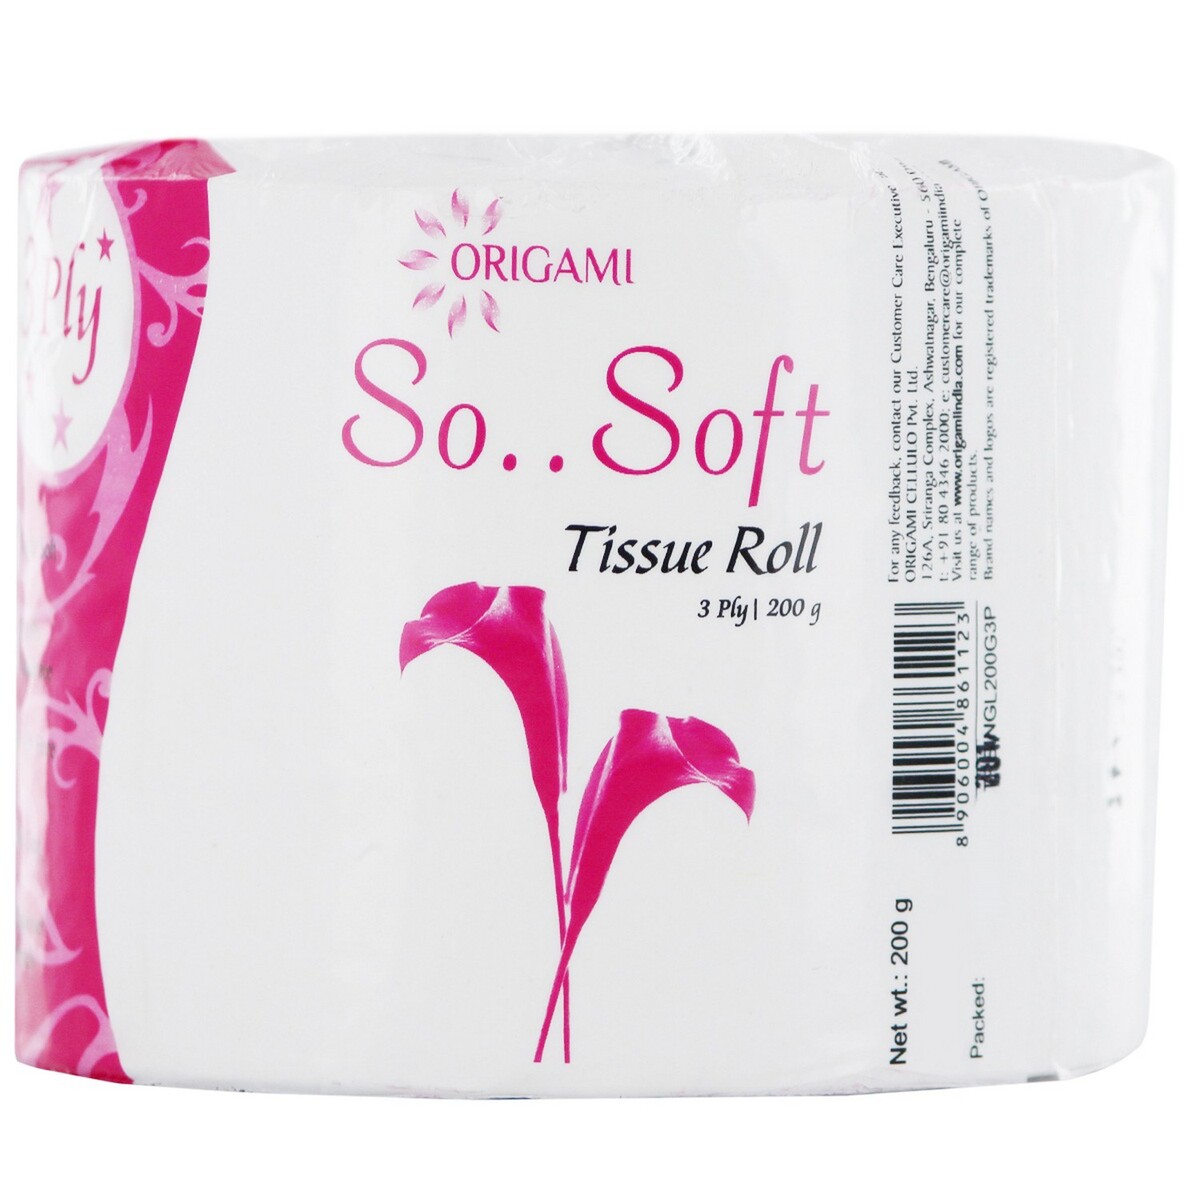 So Soft Toilet Tissue Roll 3ply 200g